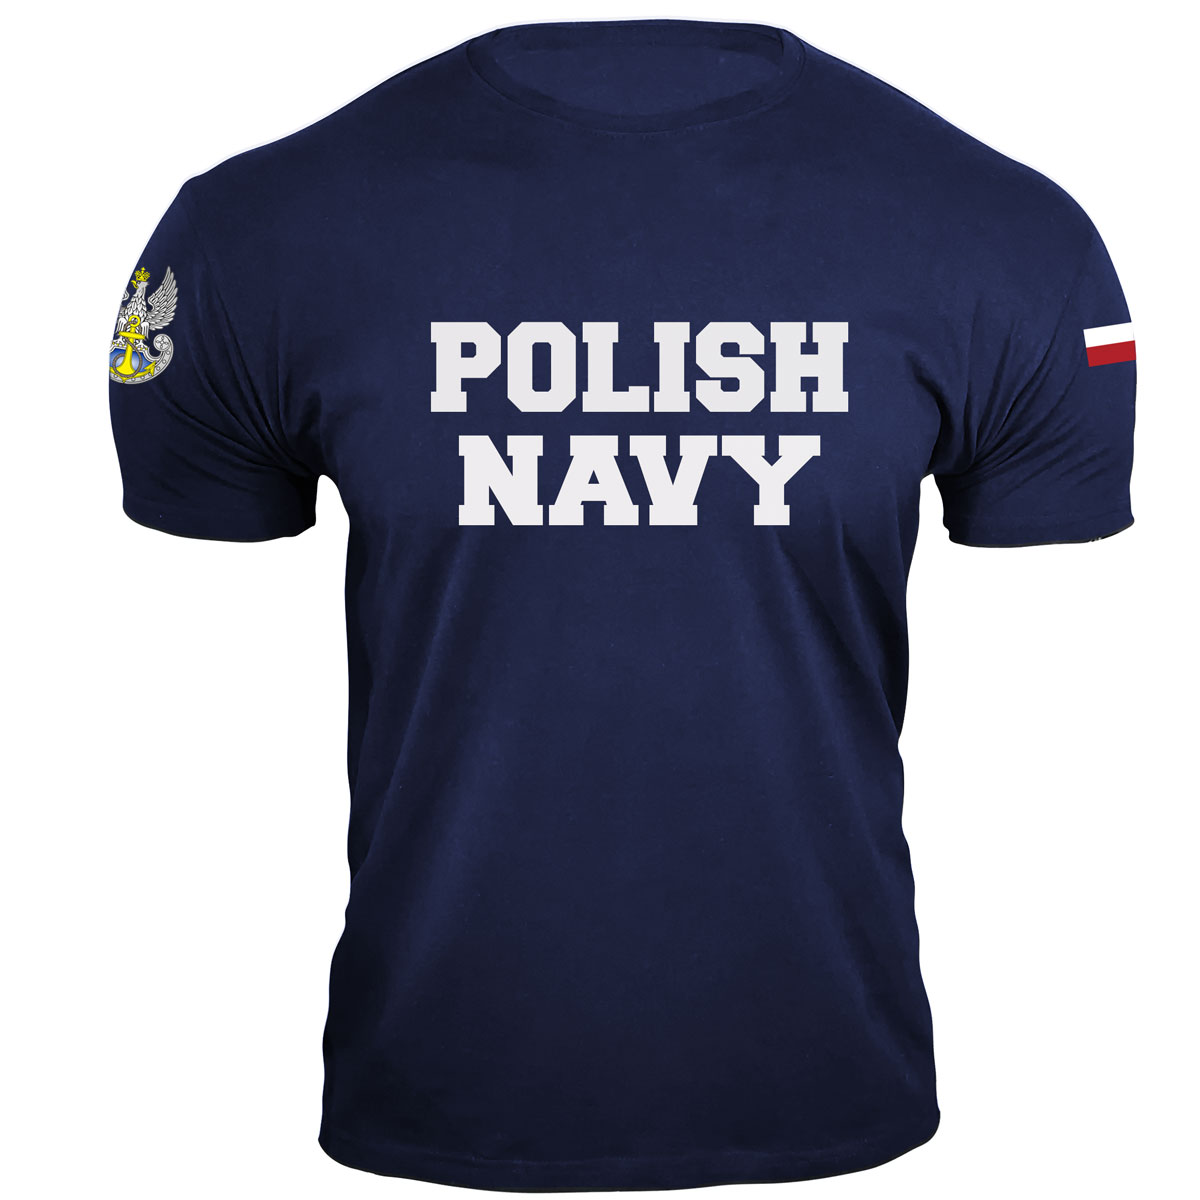 koszulka marynarka wojenna t-shirt koszulka marnarki wojennej navy granatowa polish navy